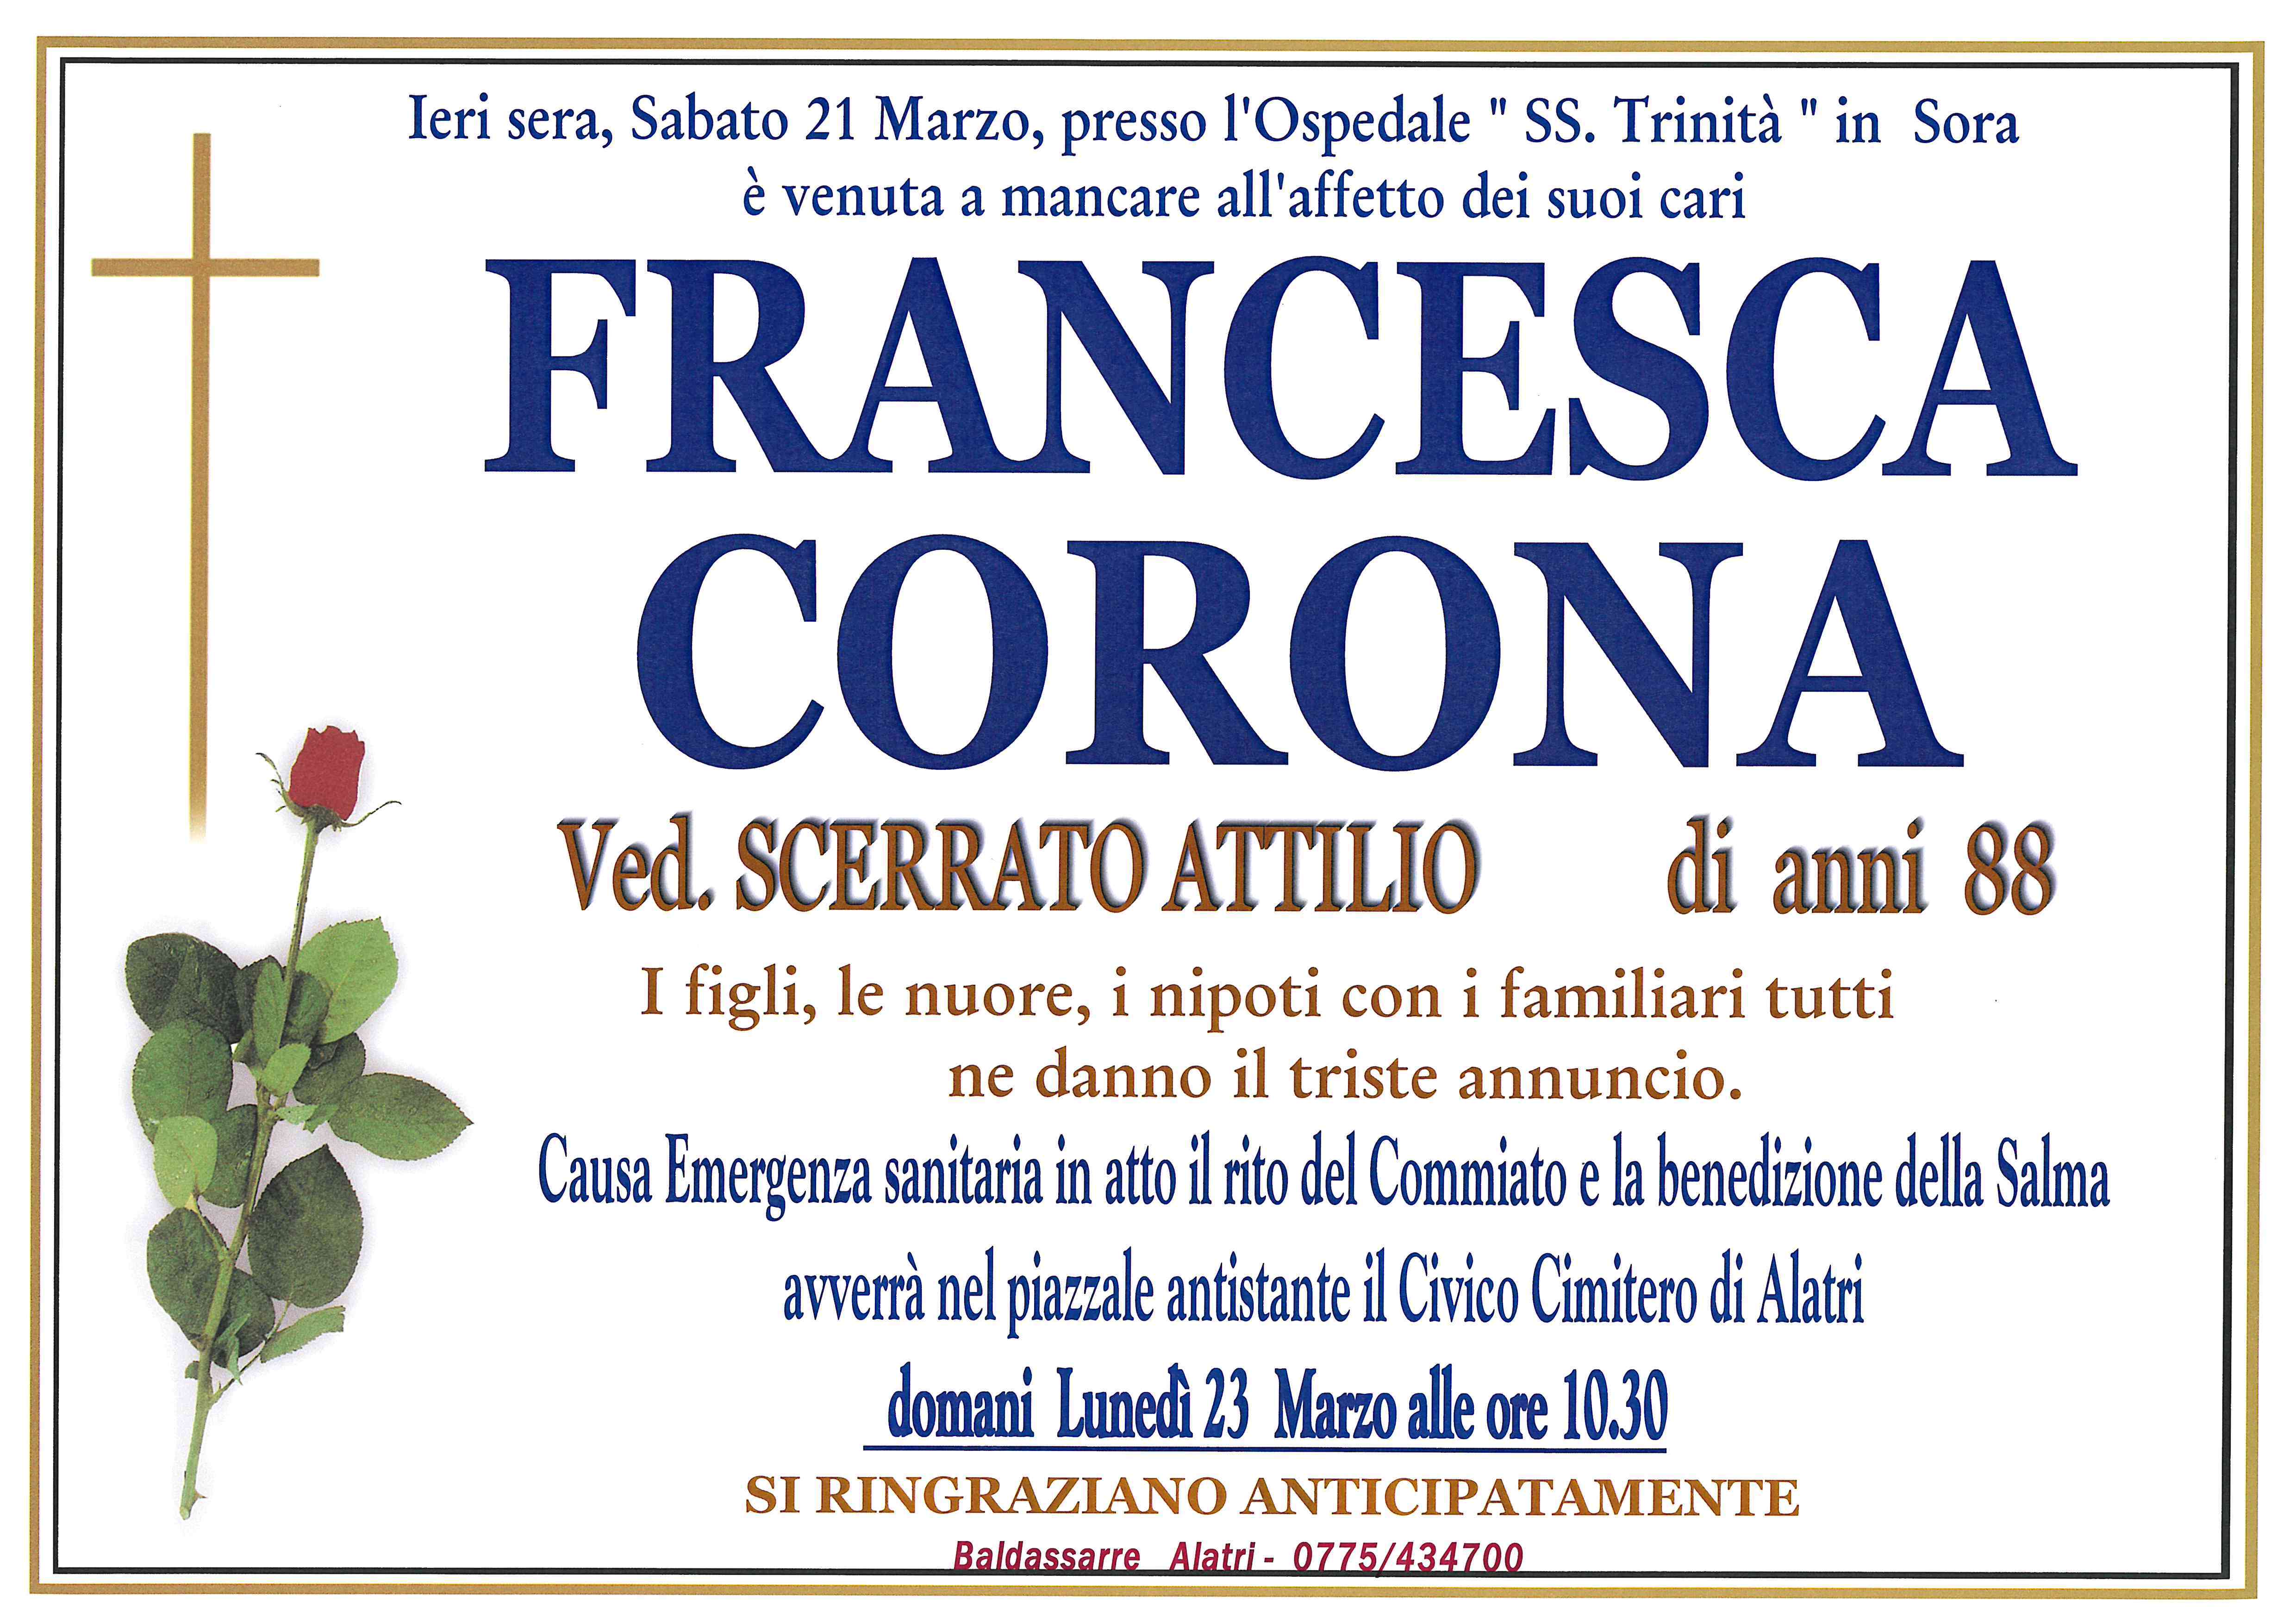 Francesca Corona